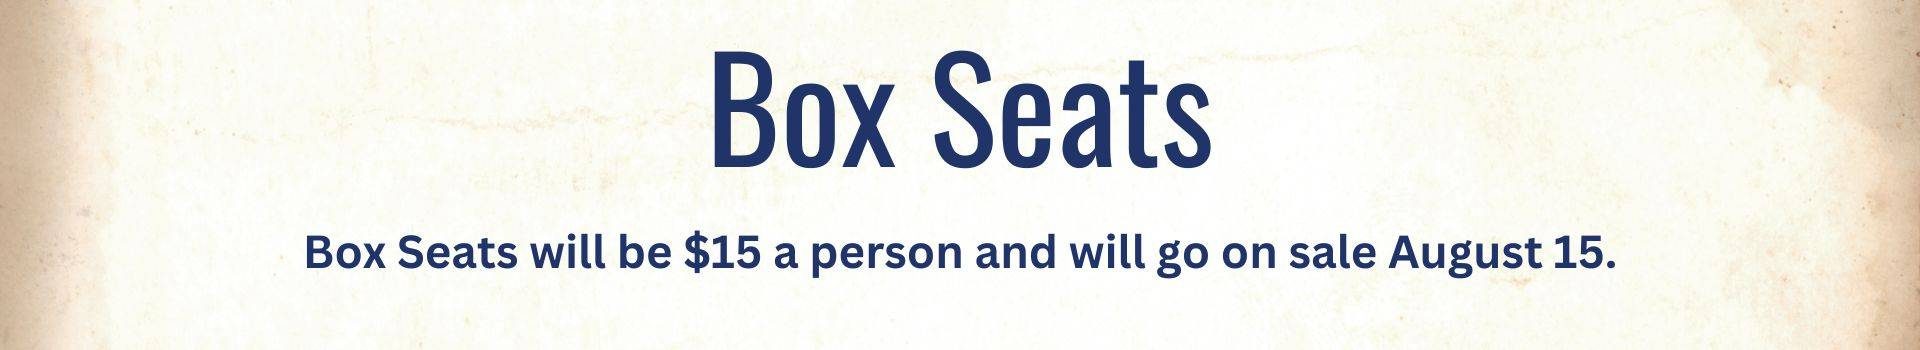 box seats